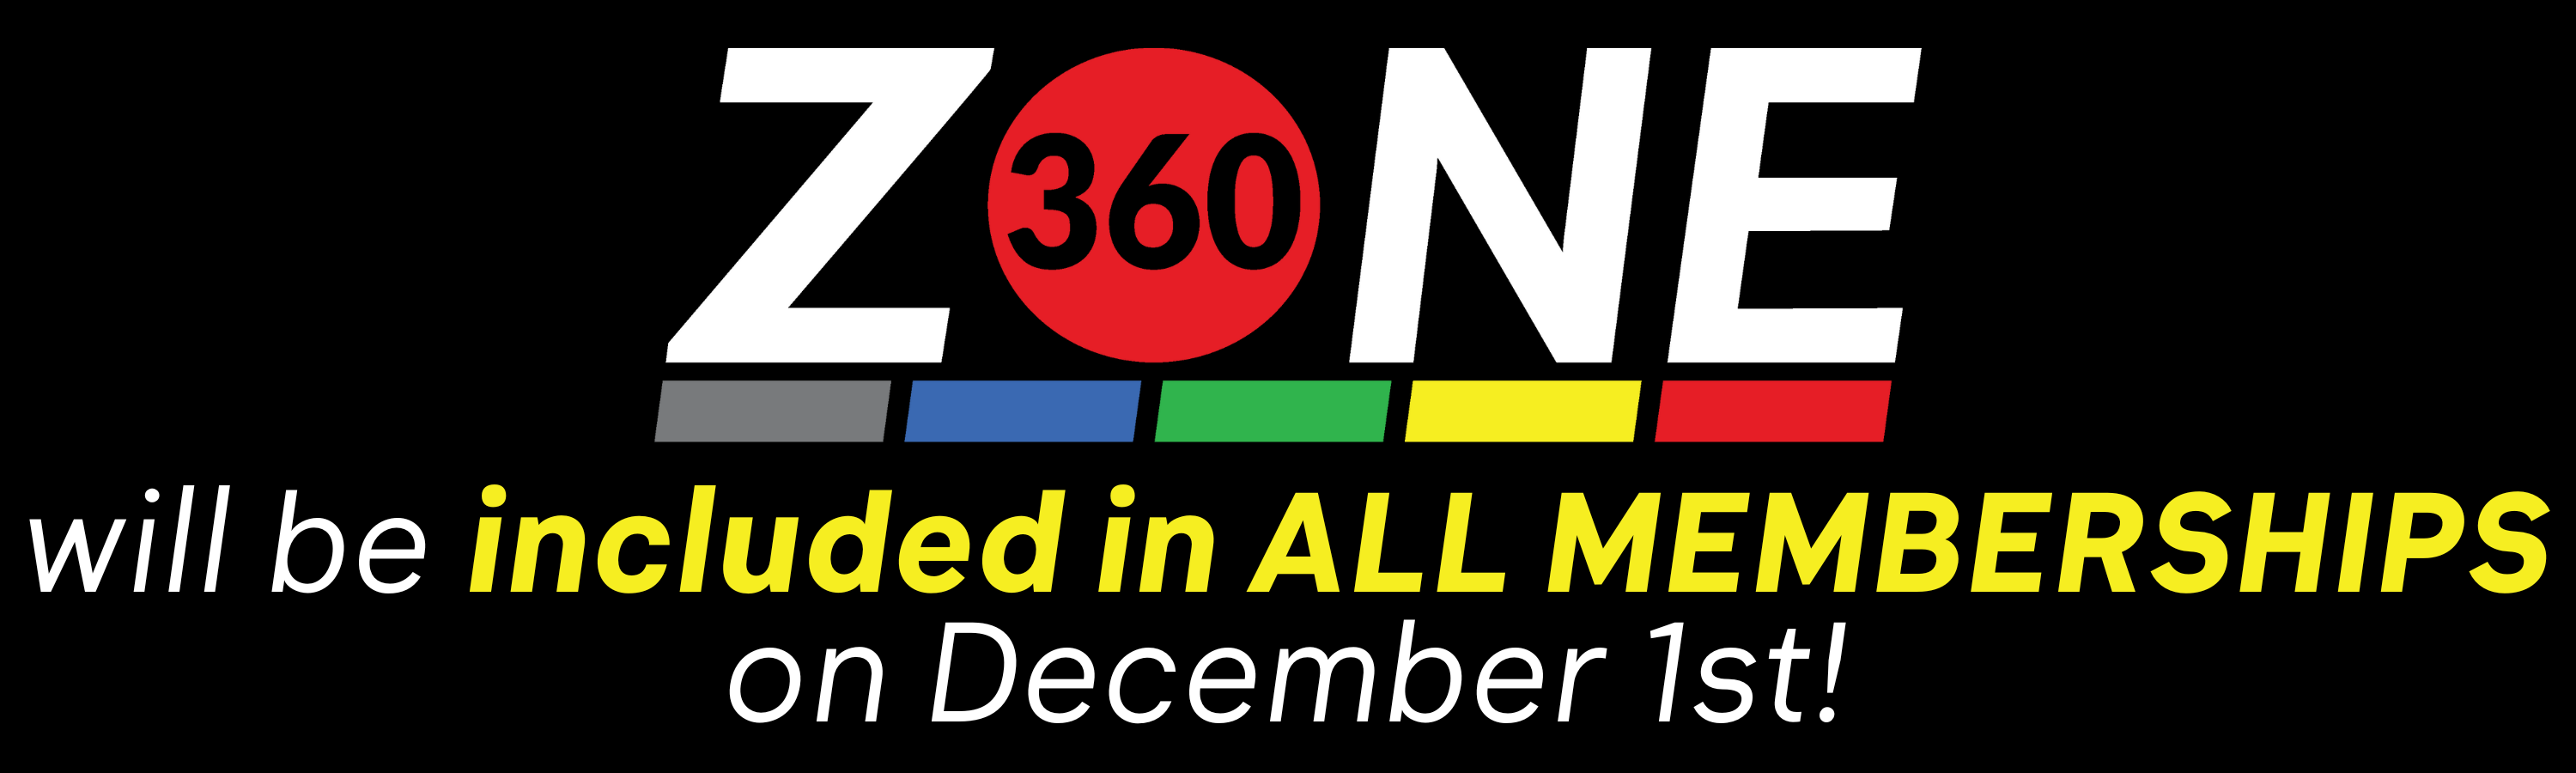 Wheaton Sport Center Membership Inclusions - ZONE360 HIIT classes